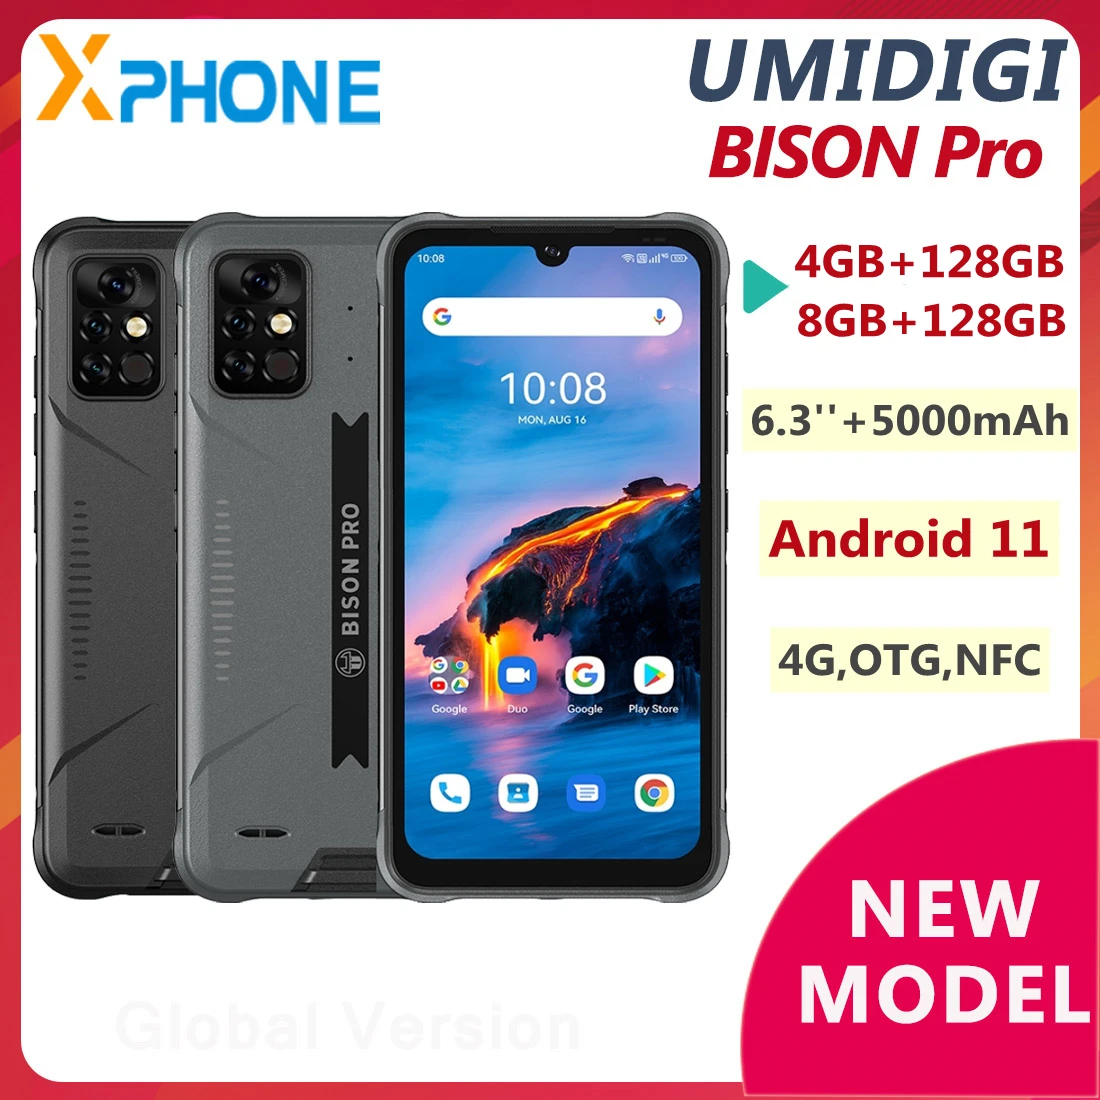 umidigi latest phone UMIDIGI BISON Pro Smarphone IP68/IP69K 48MP Rear Camera 6.3'' Android 11 5000mAh MTK Helio G80 Support 4G OTG NFC Rugged Phone best poco camera phone